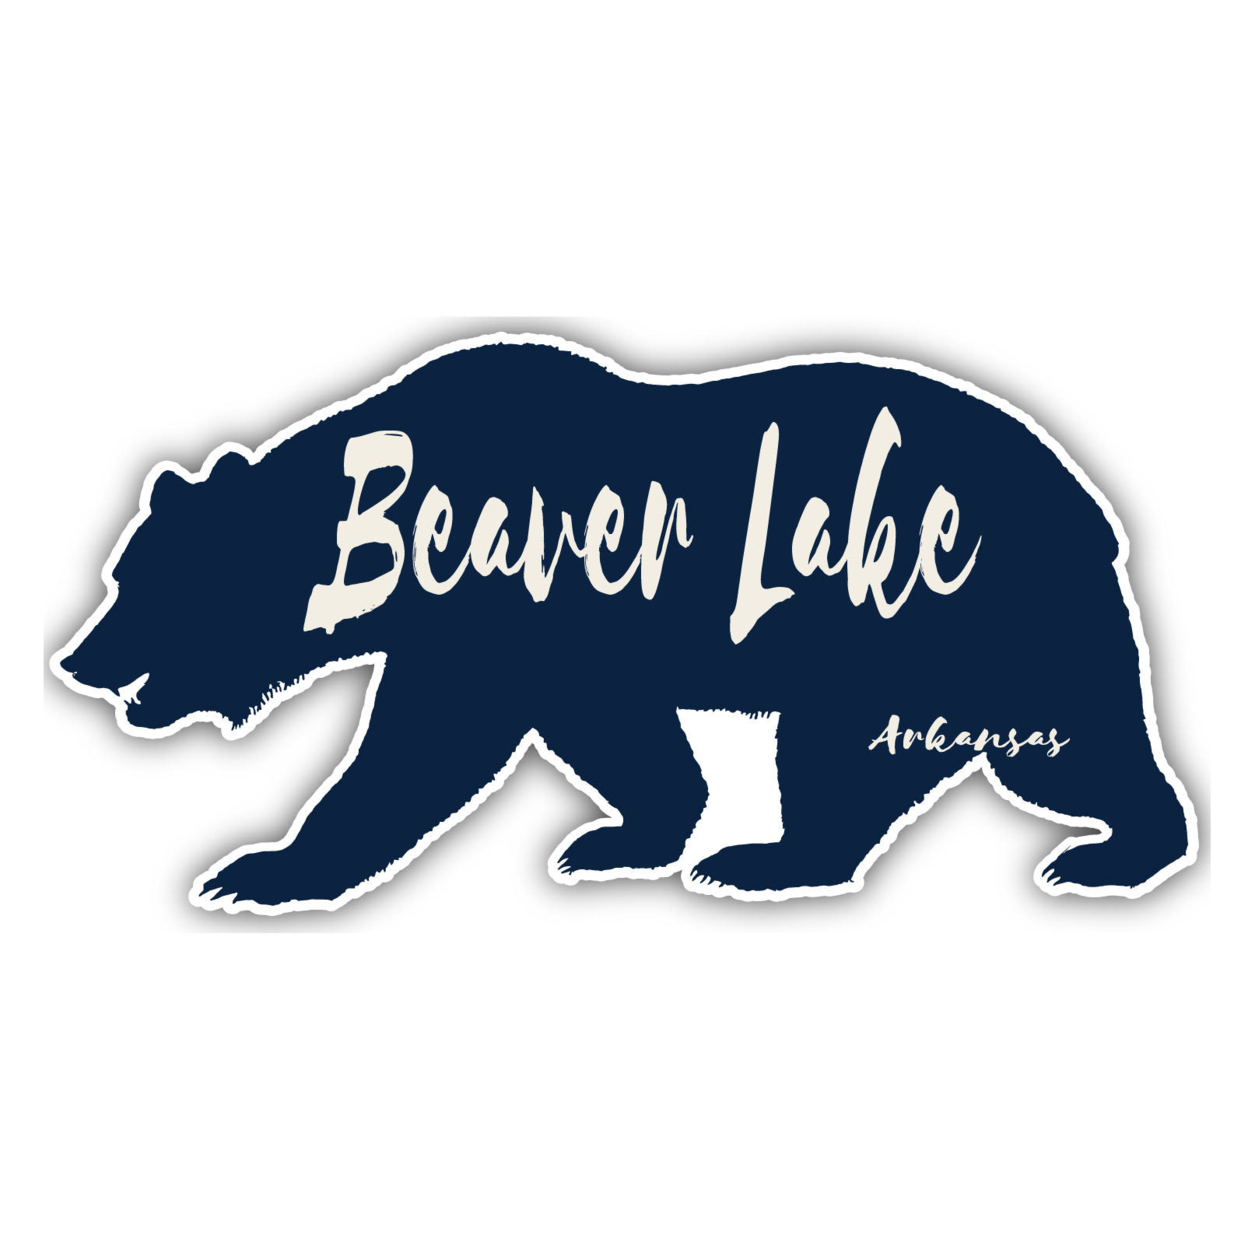 Beaver Lake Arkansas Souvenir Decorative Stickers (Choose Theme And Size) - Single Unit, 4-Inch, Tent